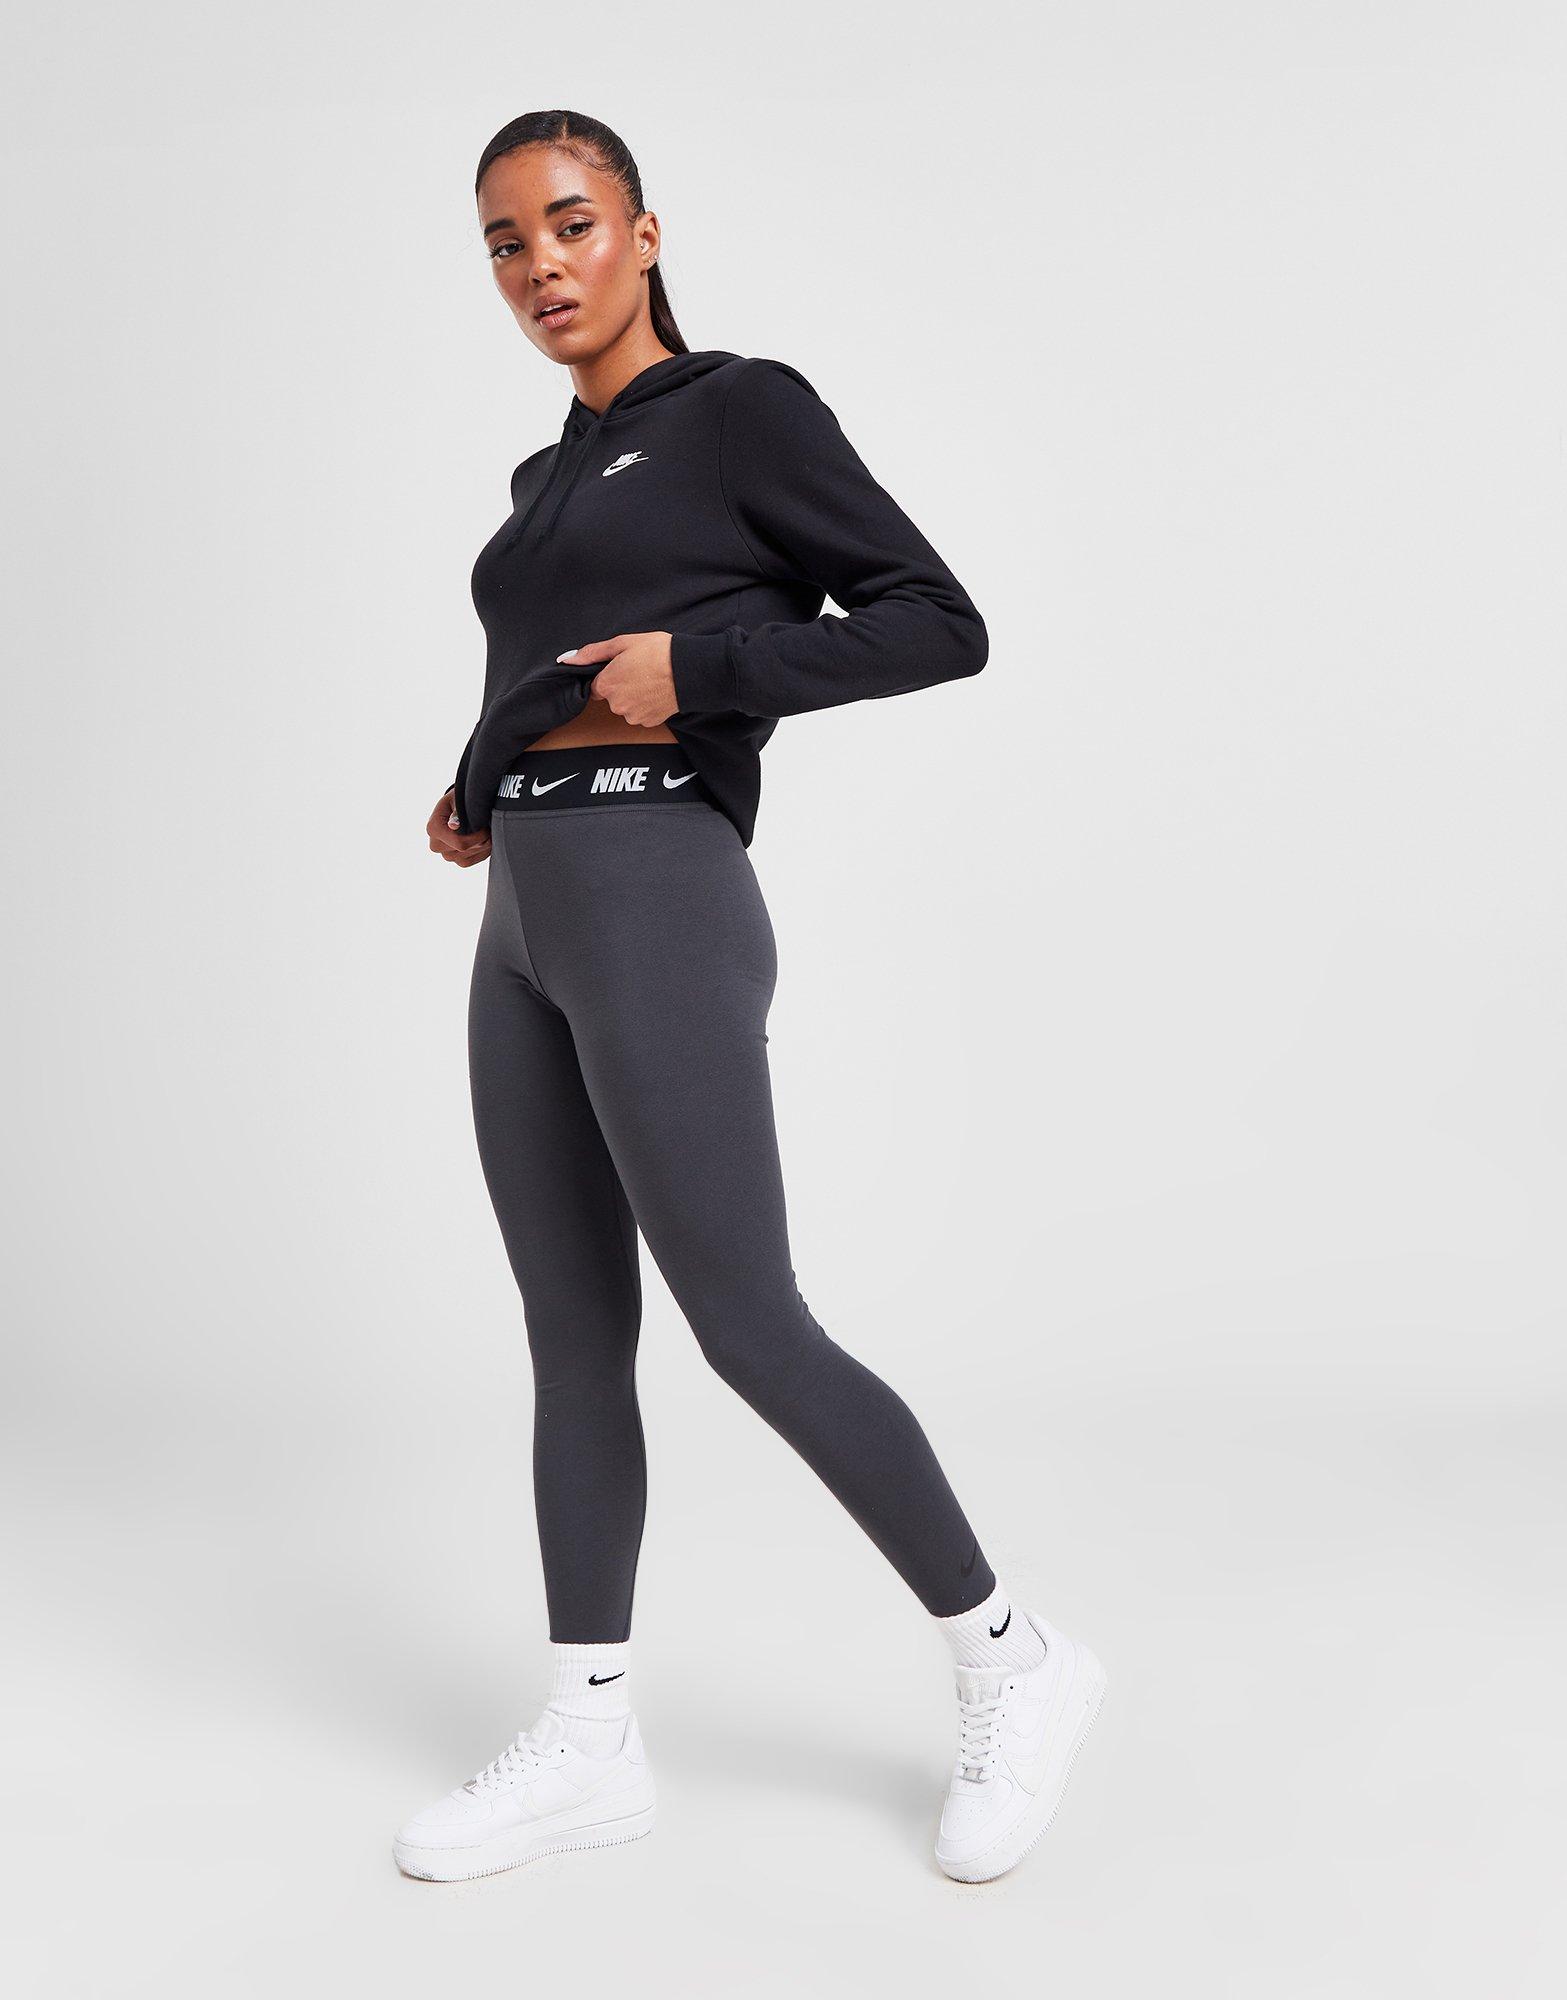 Nike grey leggings with black logo